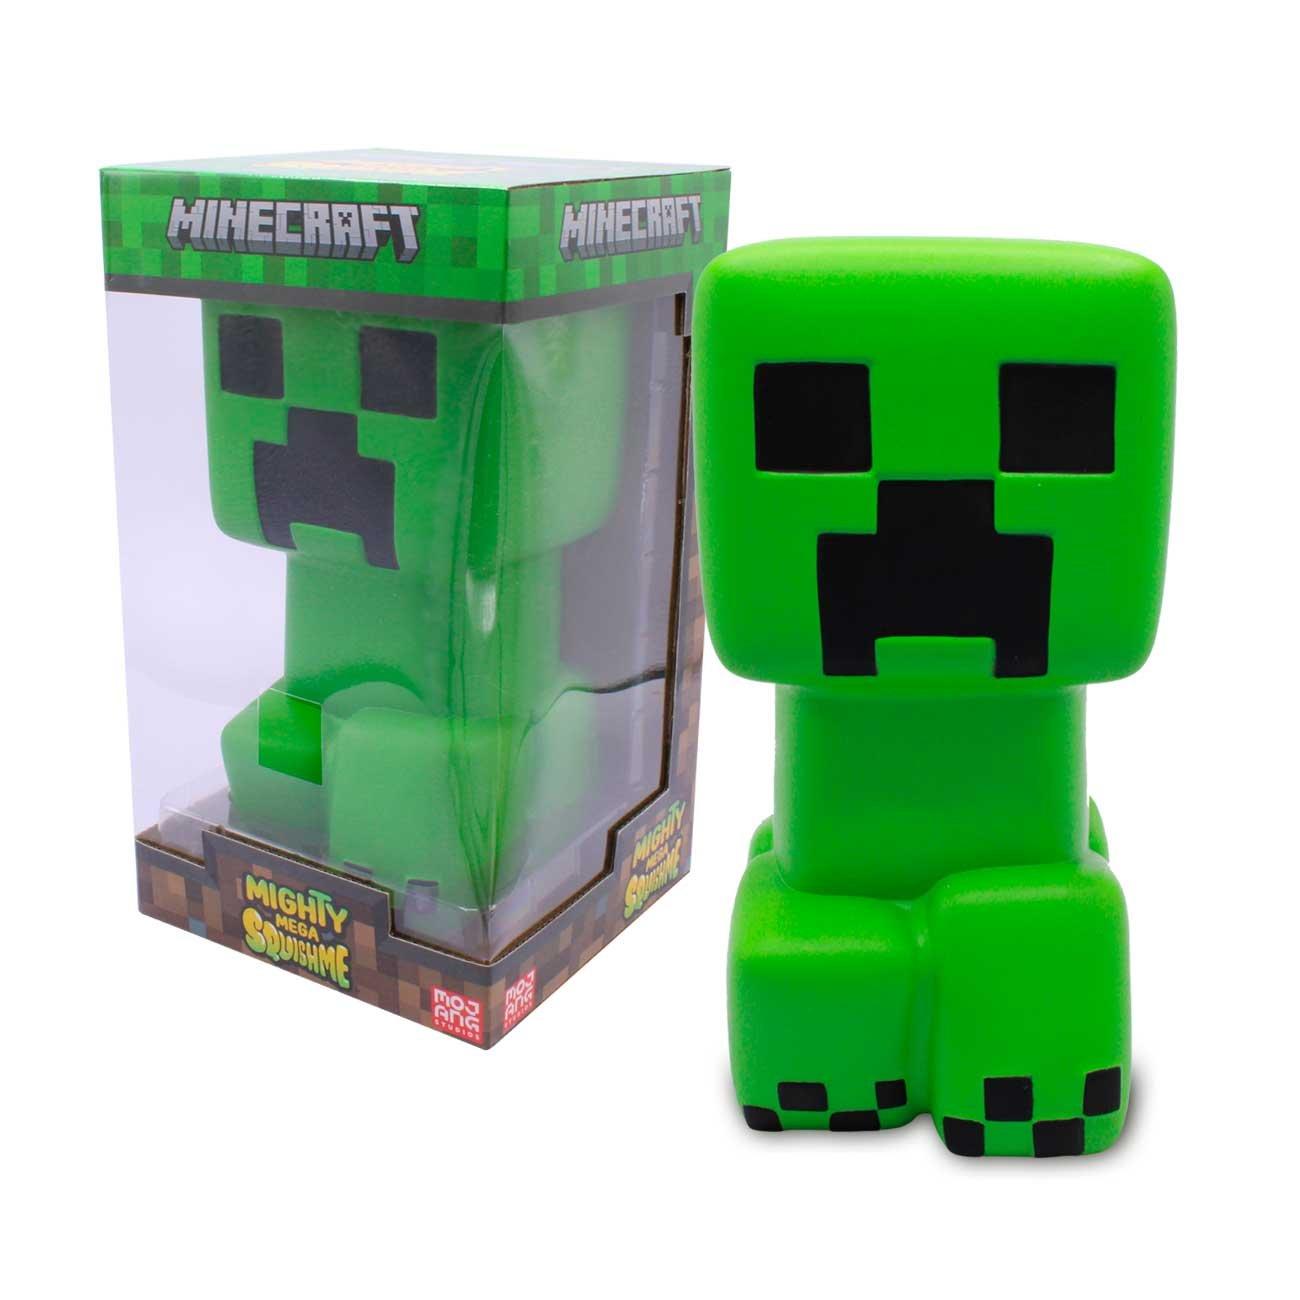 Glowing figurine Minecraft Creeper